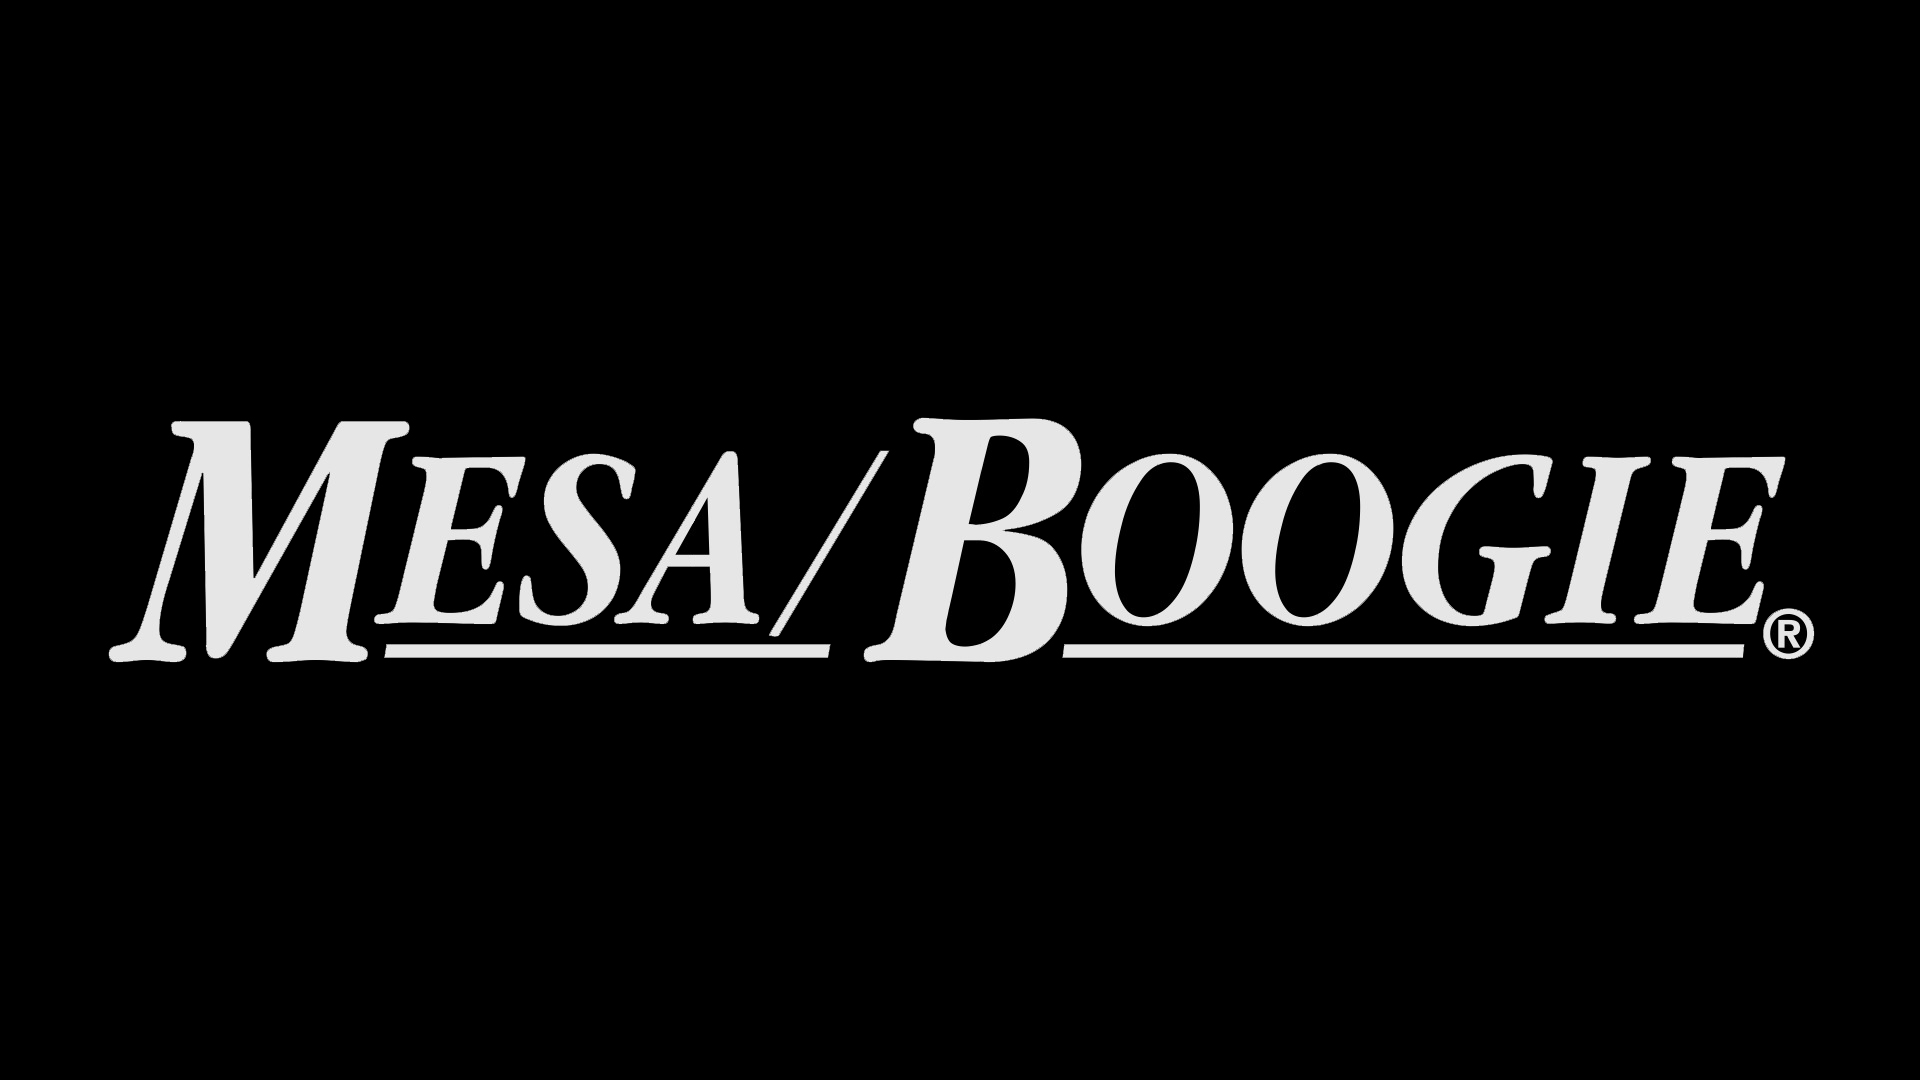 Mesa Boogie Logo Wallpaper Black 1080p